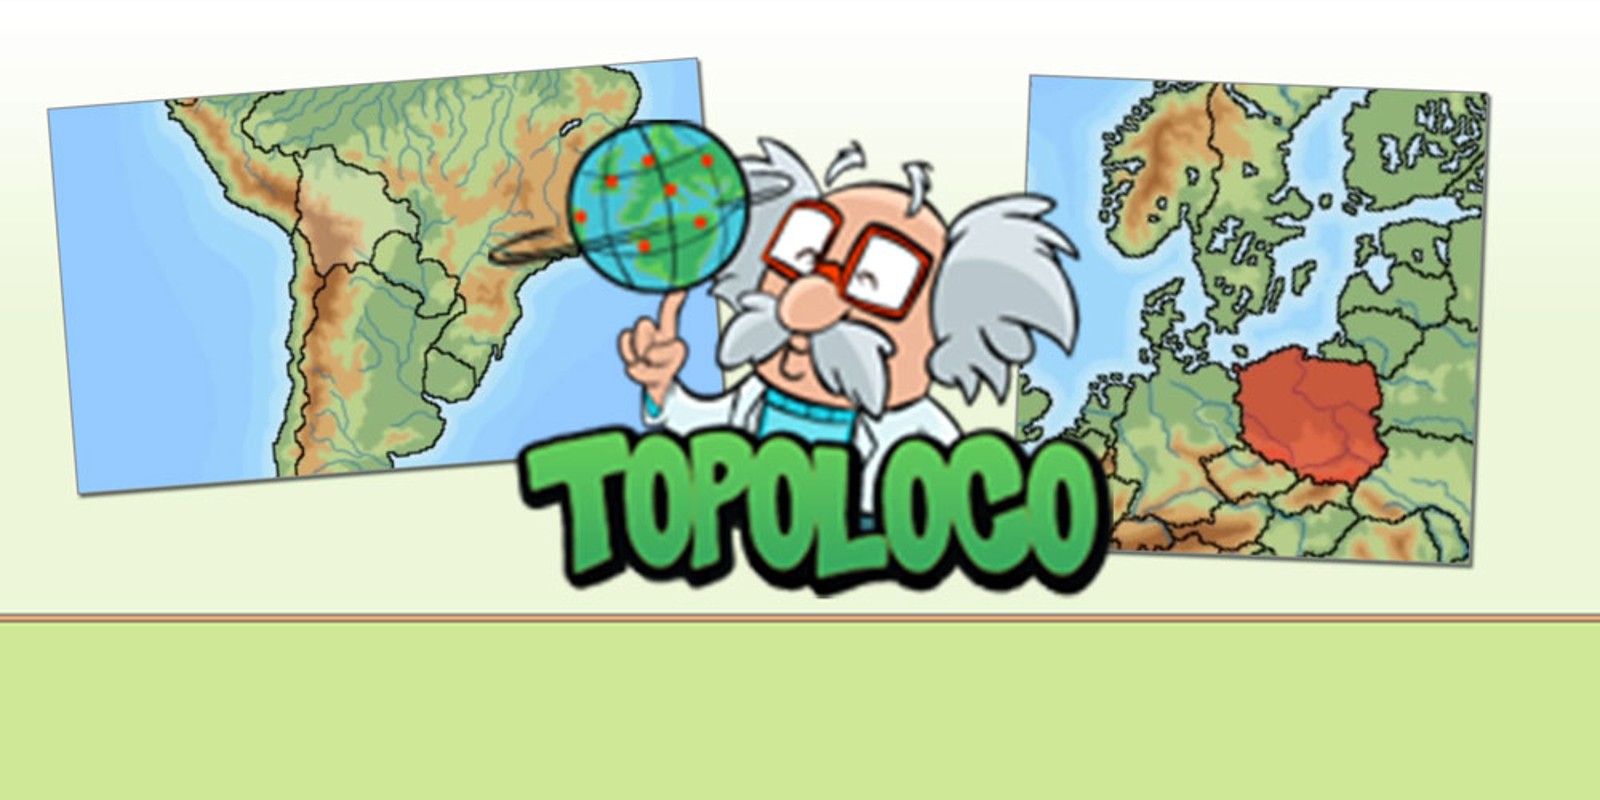 Topoloco - verrückt nach Topographie